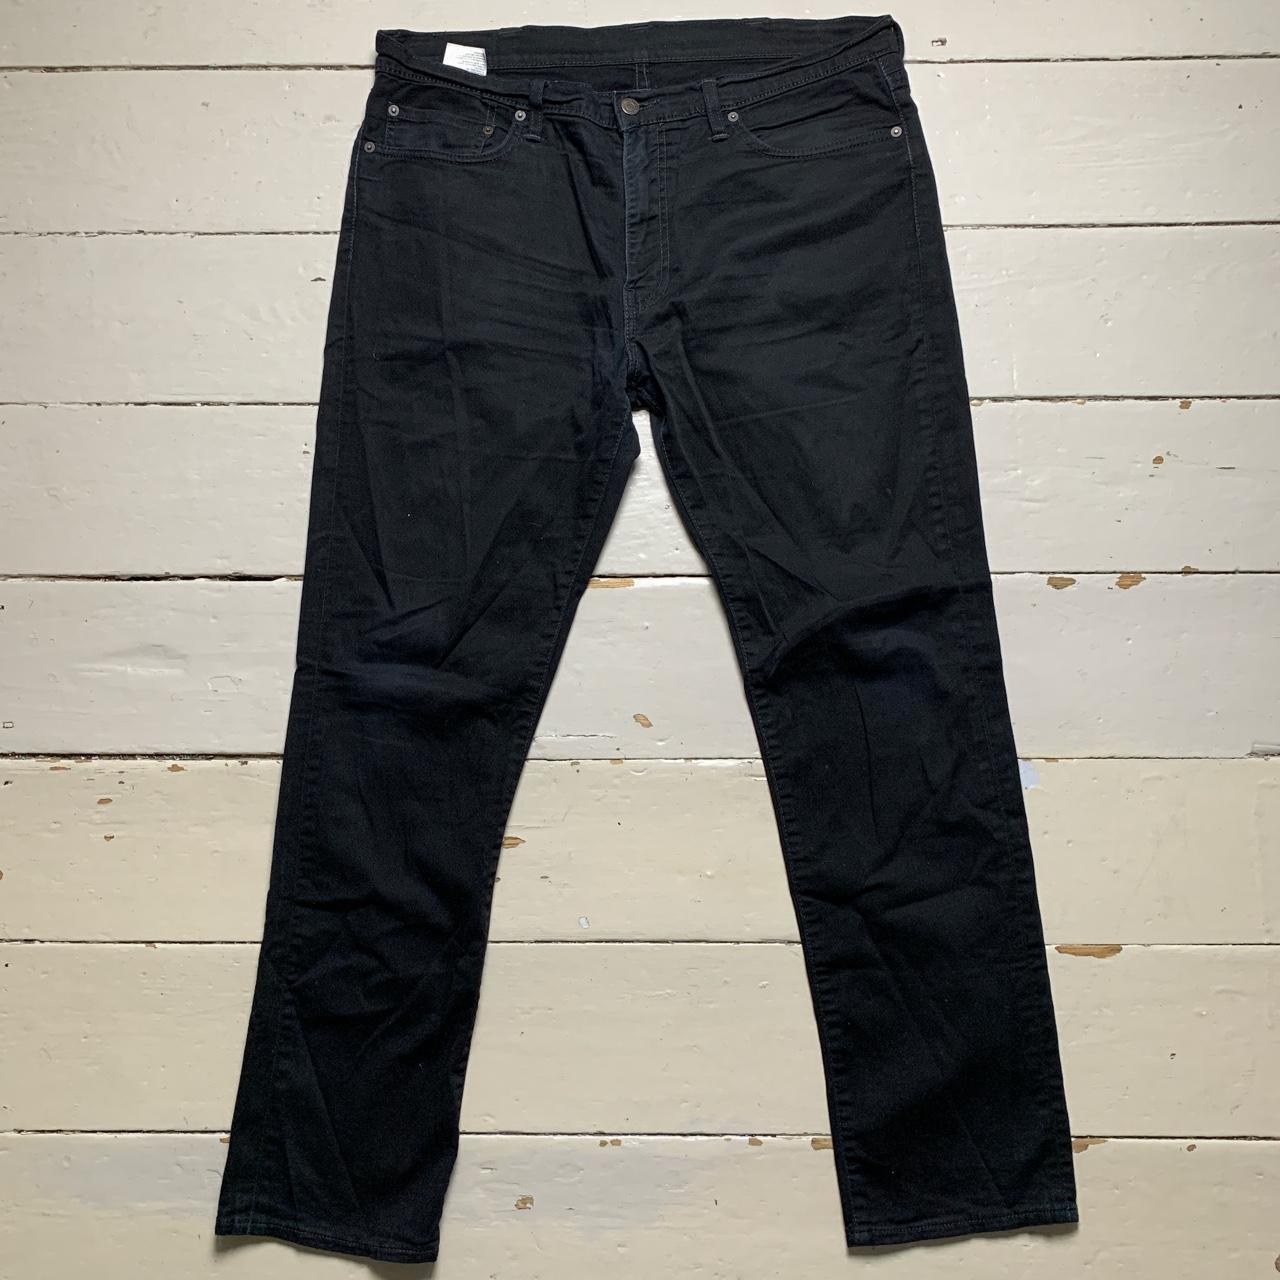 Levis 511 Black Slim Jeans